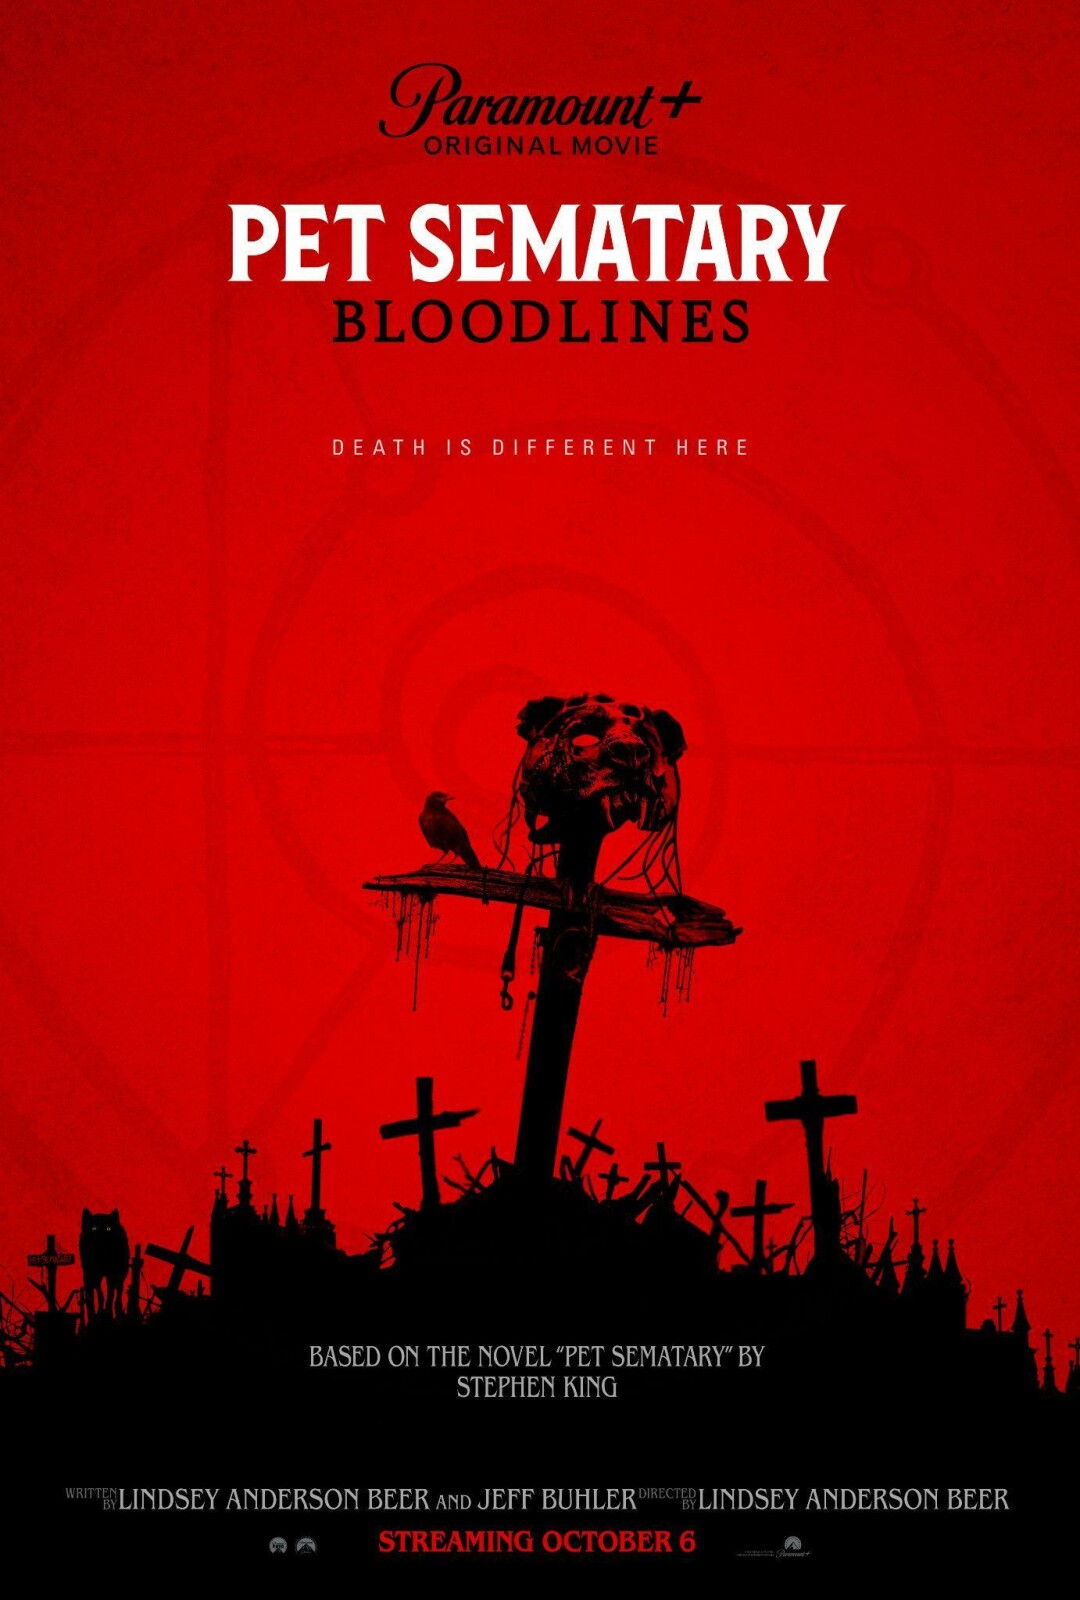 'Pet Sematary: Bloodlines' Arrives on Digital Dec. 5, on Disc Dec. 19